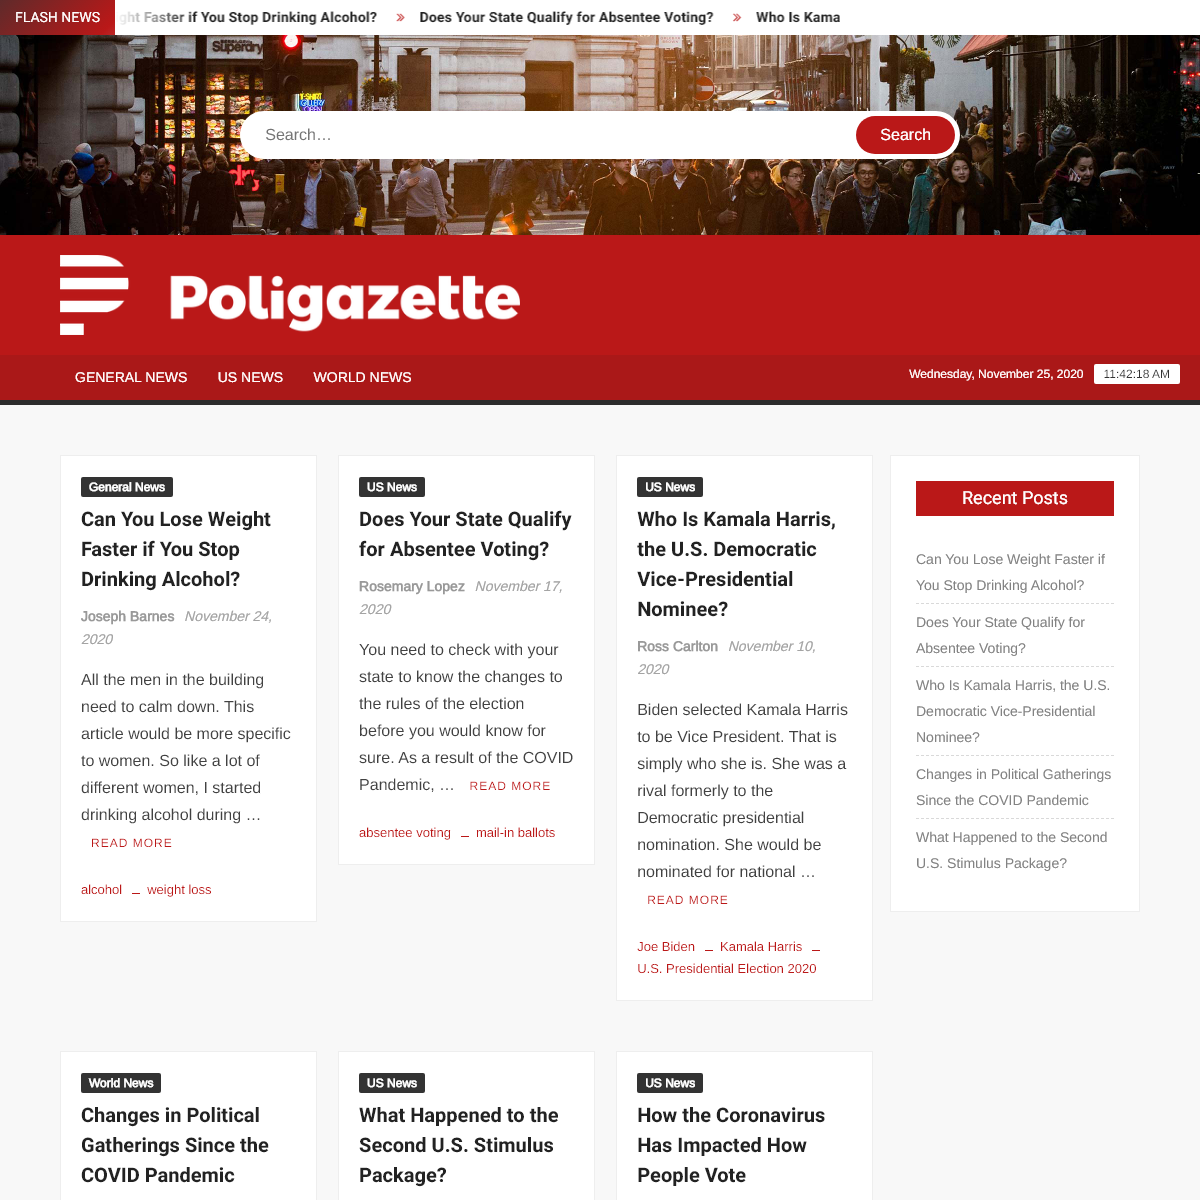 A complete backup of poligazette.com